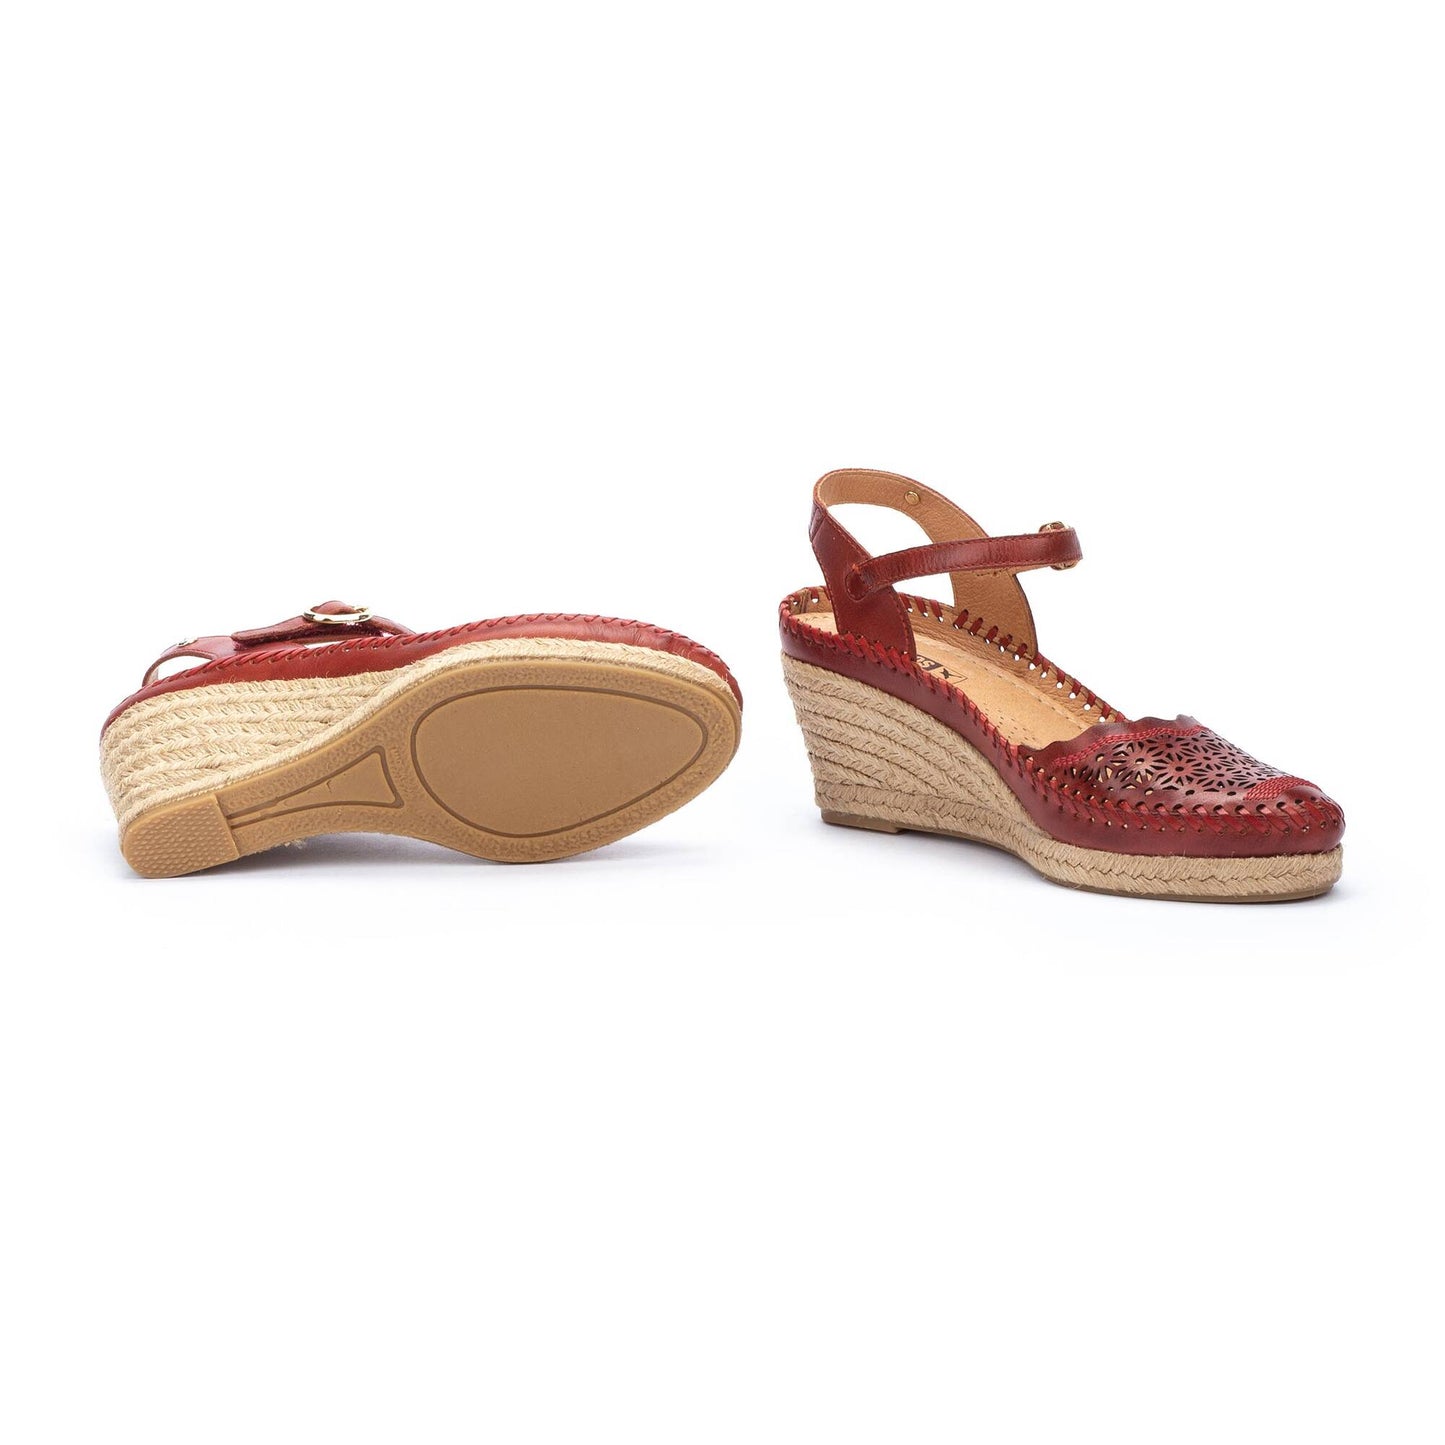 Pikolinos Women's W9Y-1508 Vila Jute Leather Wedge Sandals Sandia